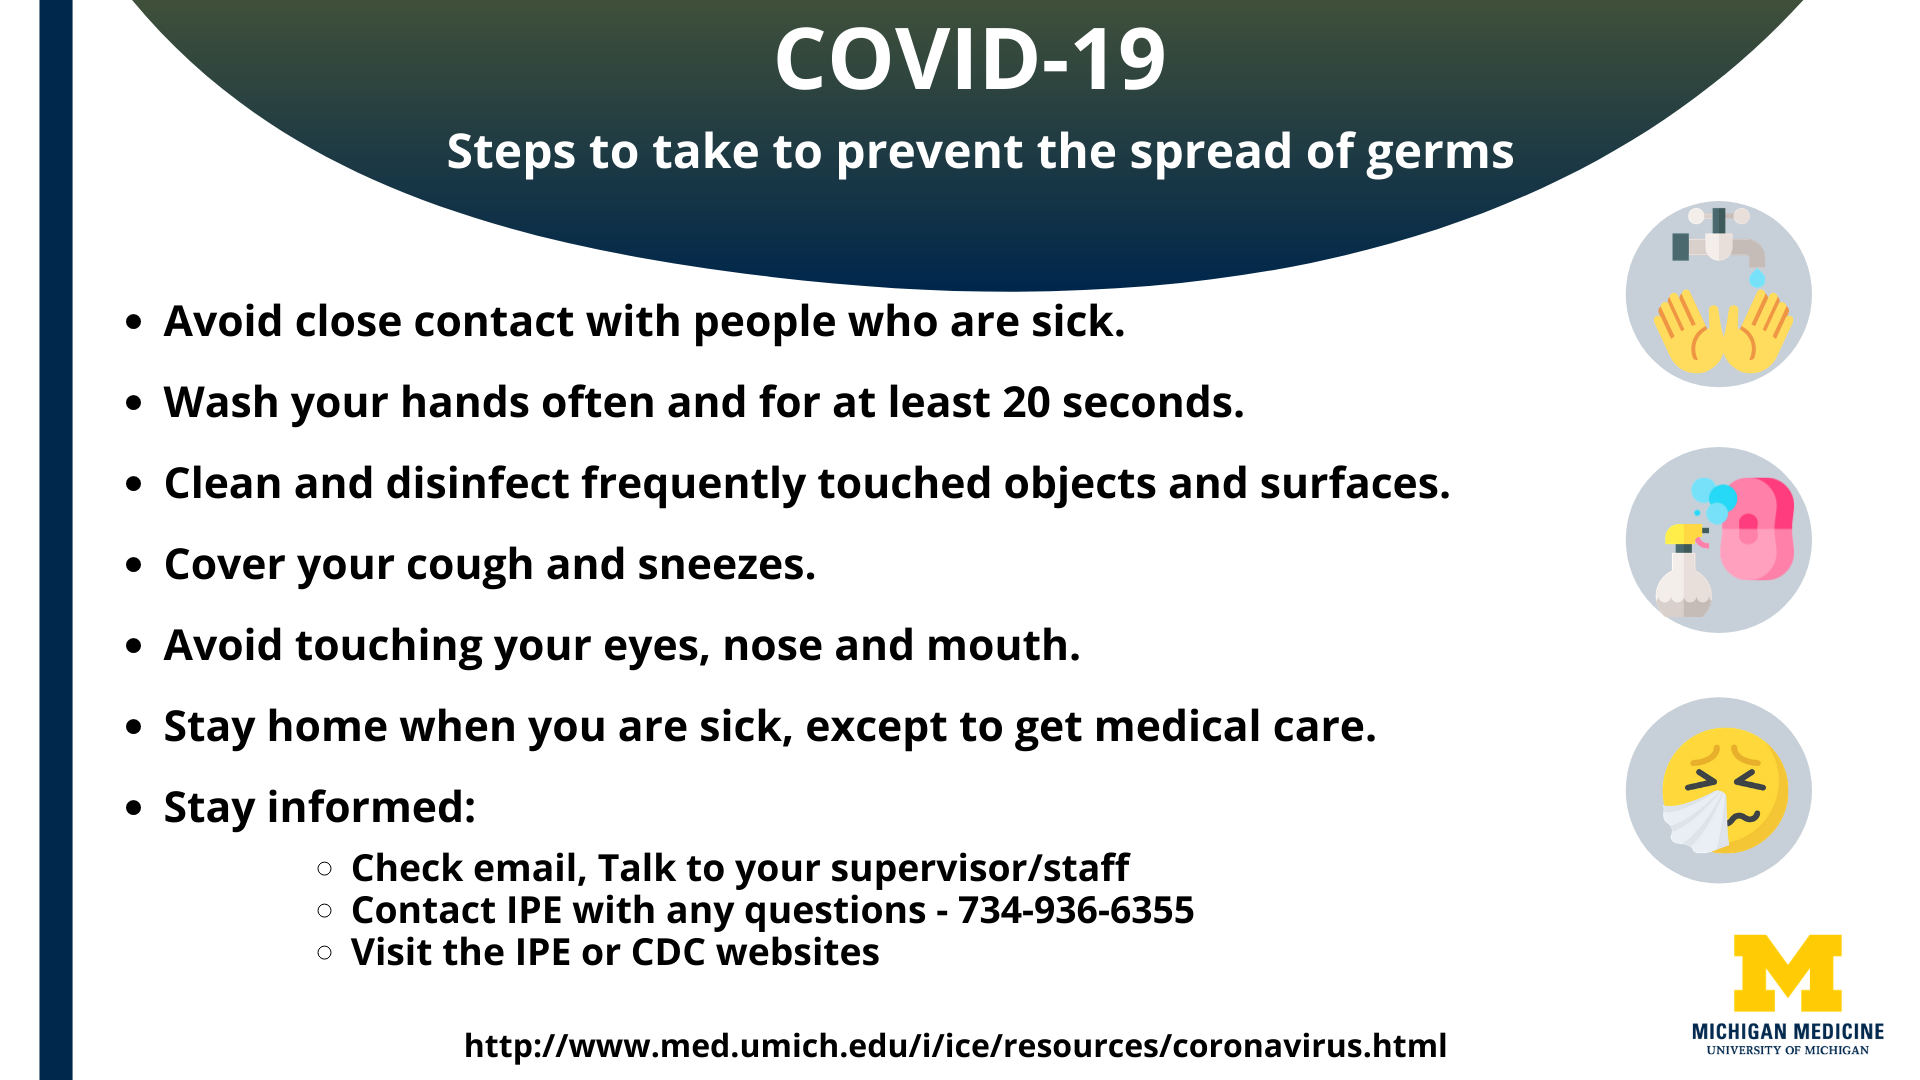 COVID 19 Updates